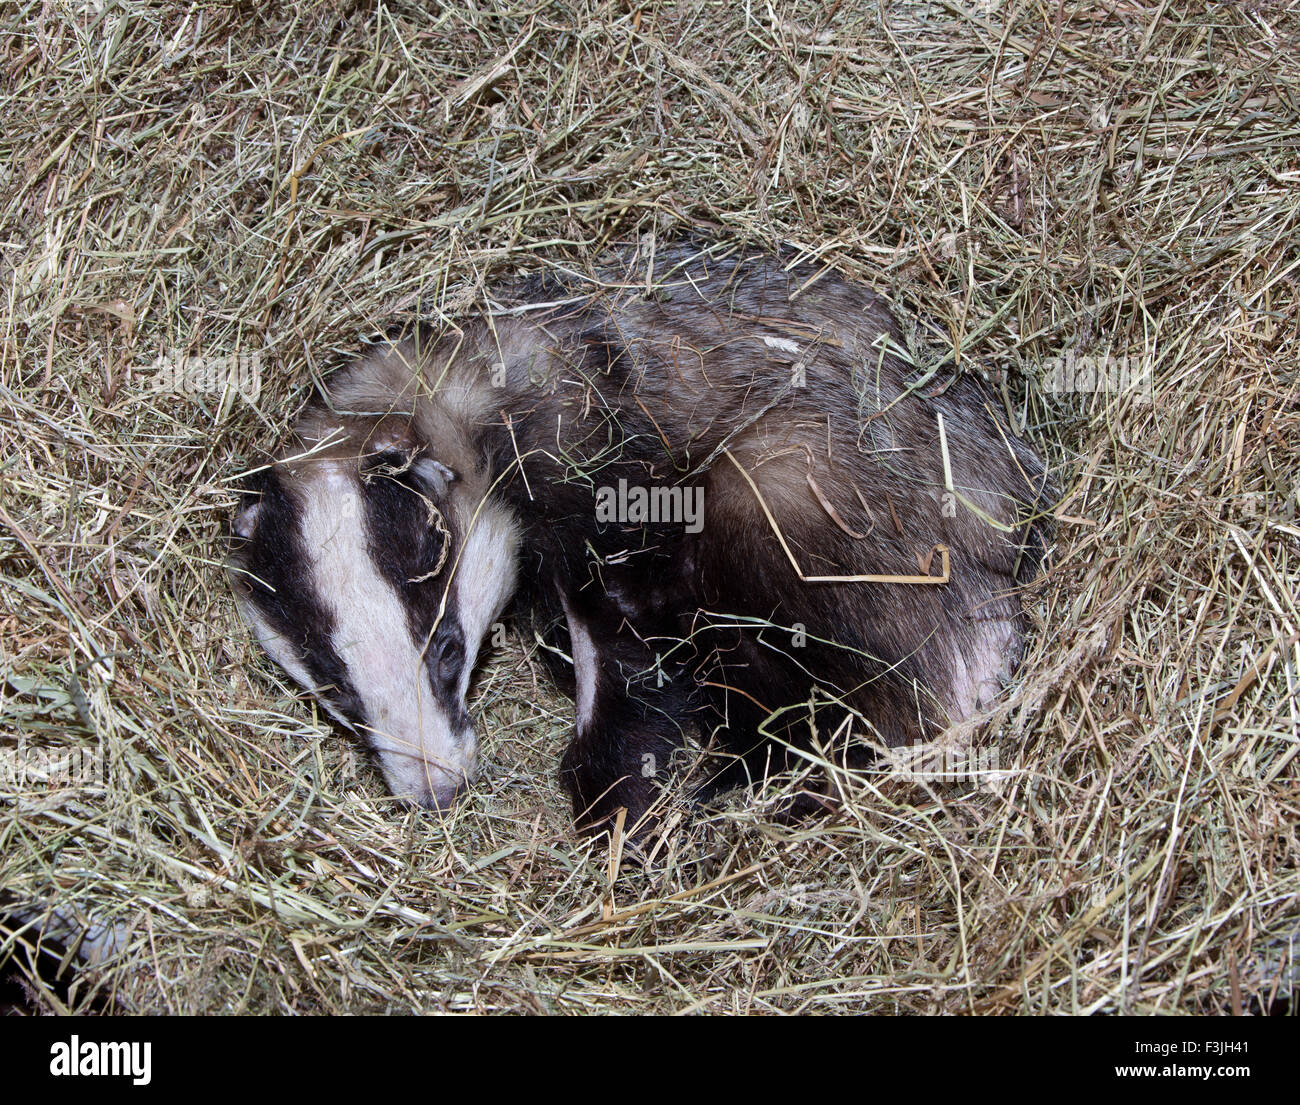 Injured Badger in care Stock Photo